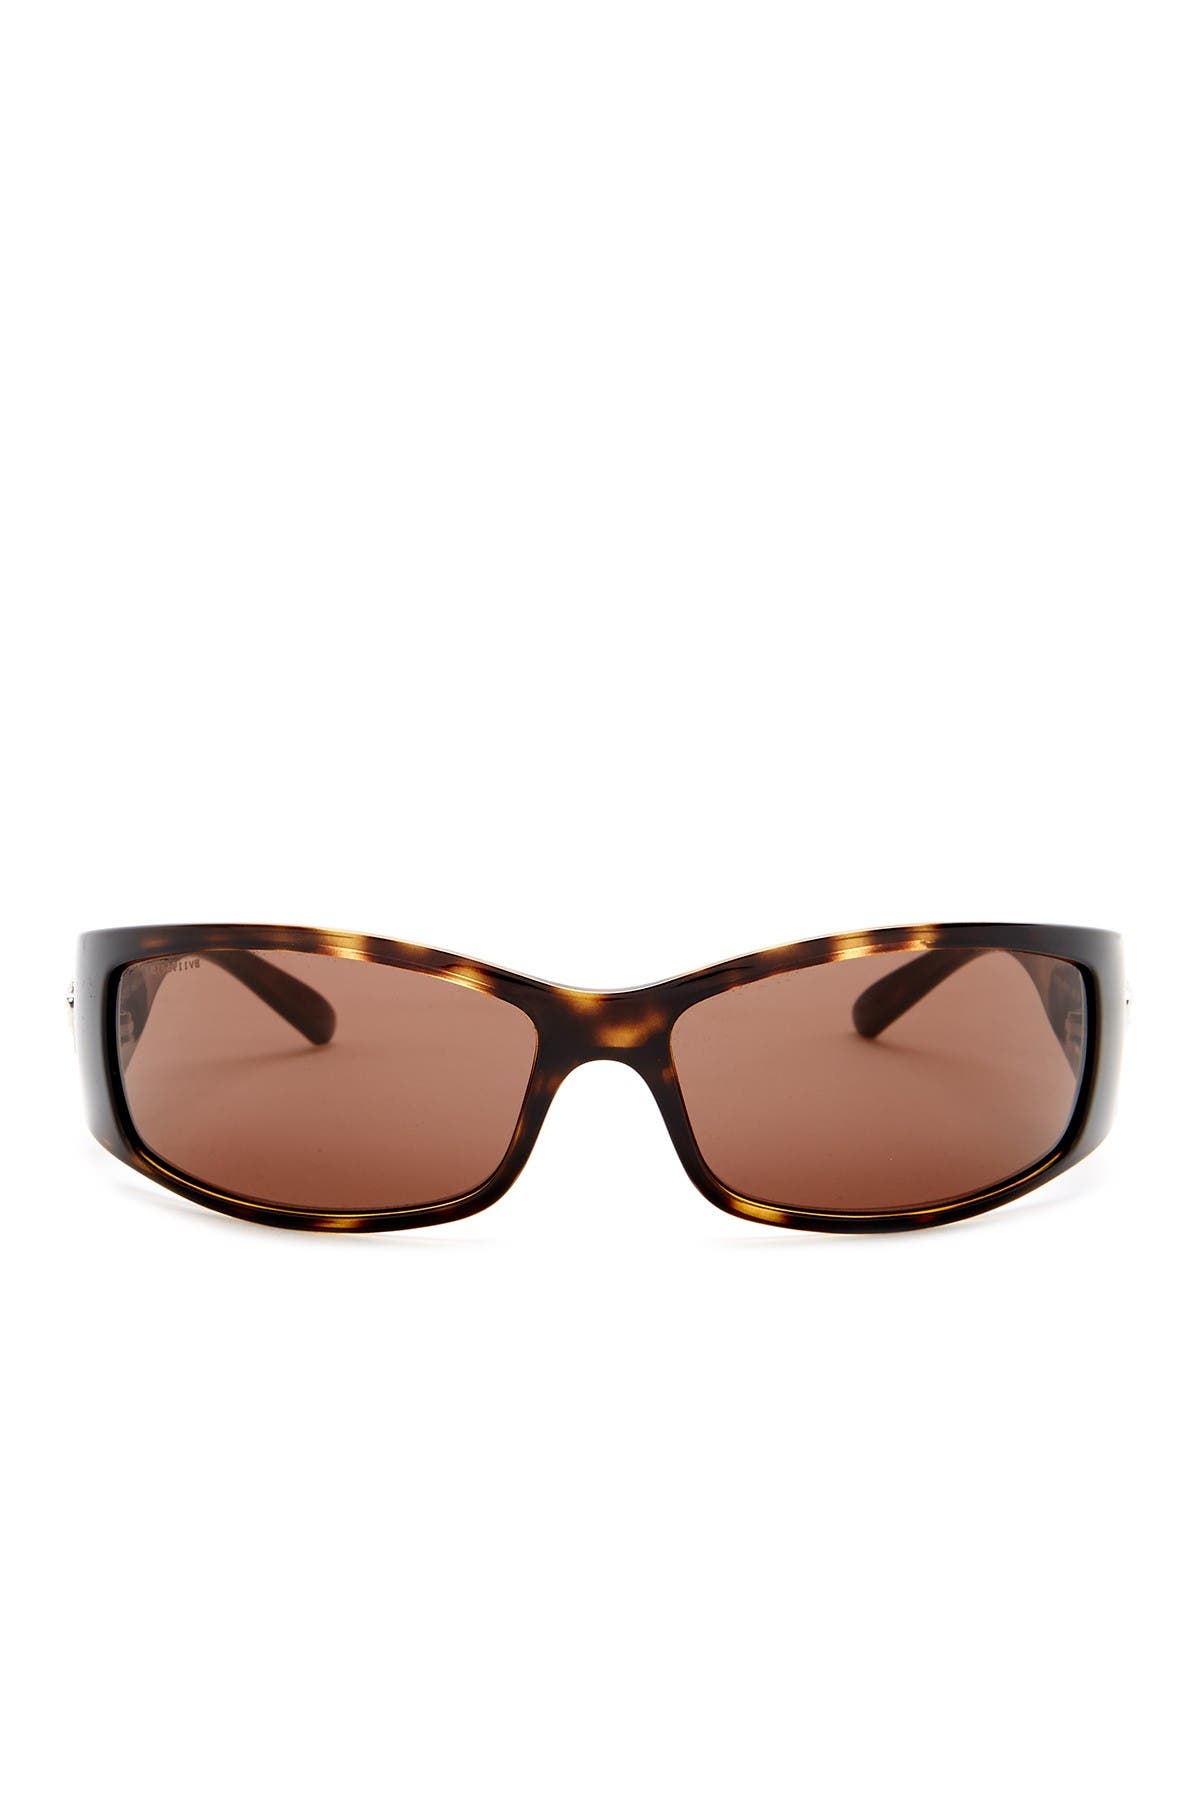 versace sunglasses nordstrom rack